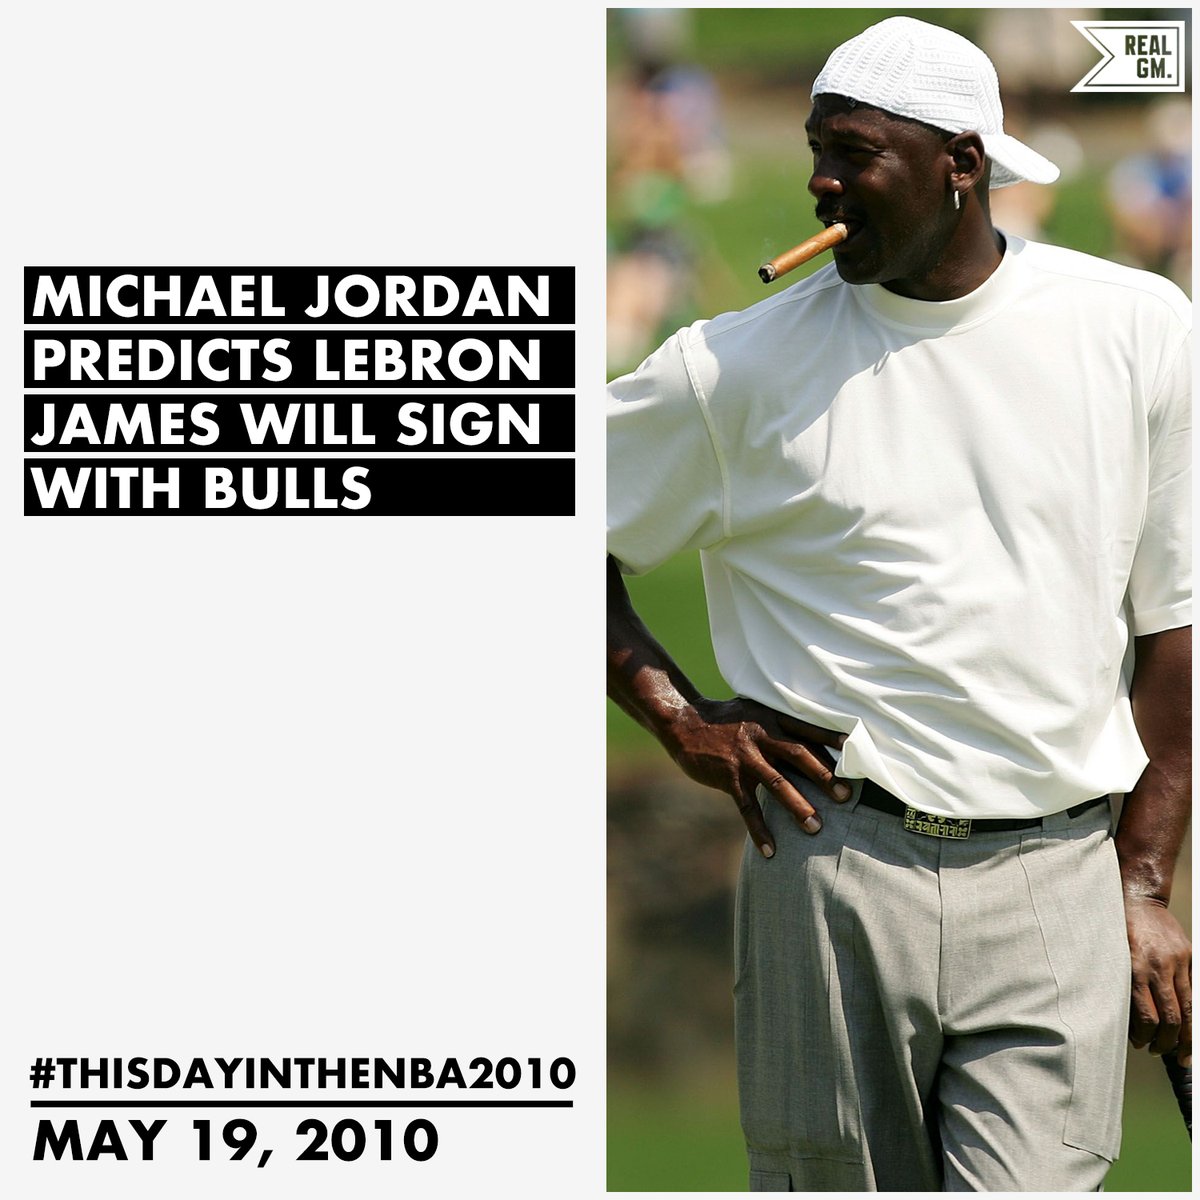  #ThisDayInTheNBA2010May 19, 2010Michael Jordan Predicts LeBron James Will Sign With Bulls https://basketball.realgm.com/wiretap/203993/Michael-Jordan-Predicts-LeBron-James-Will-Sign-With-Bulls